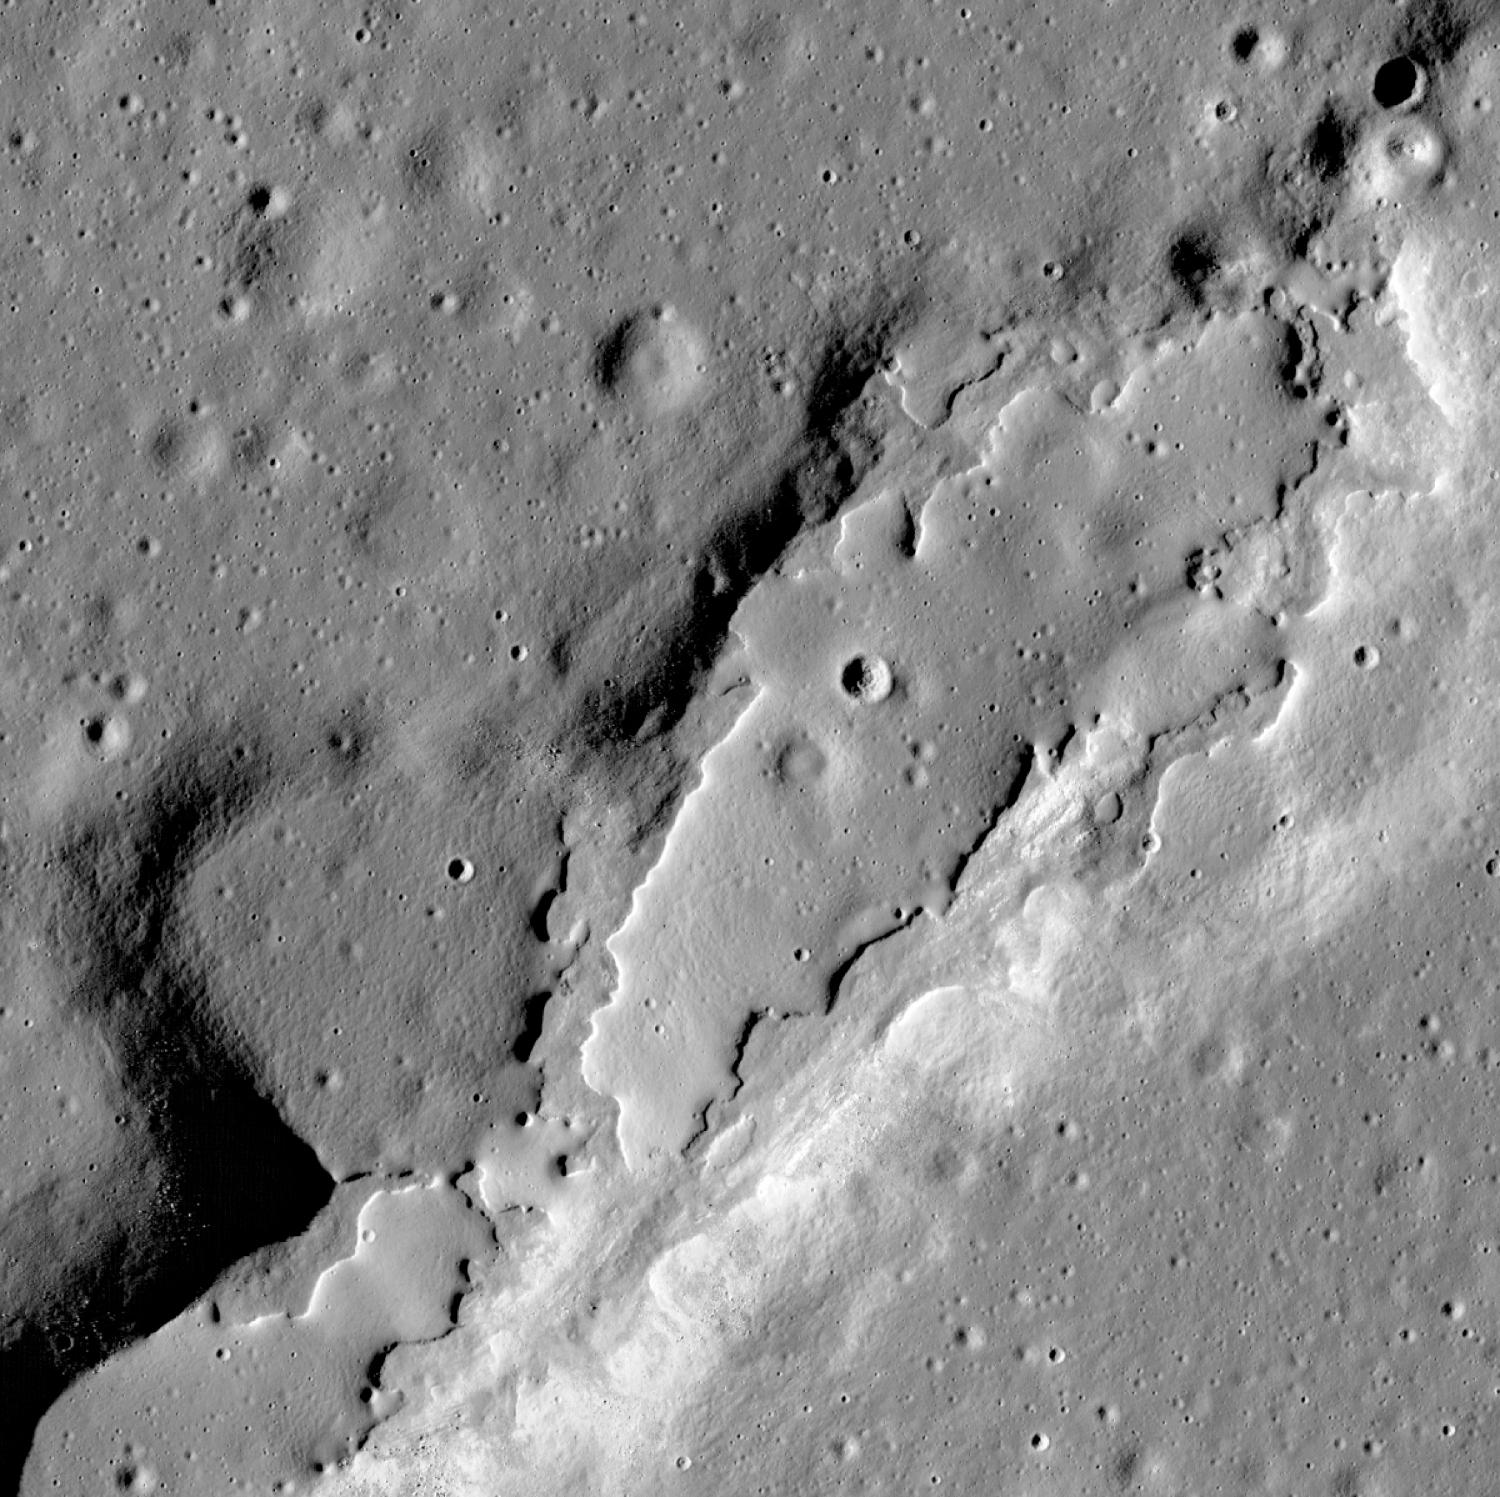 Lava flows on the moon